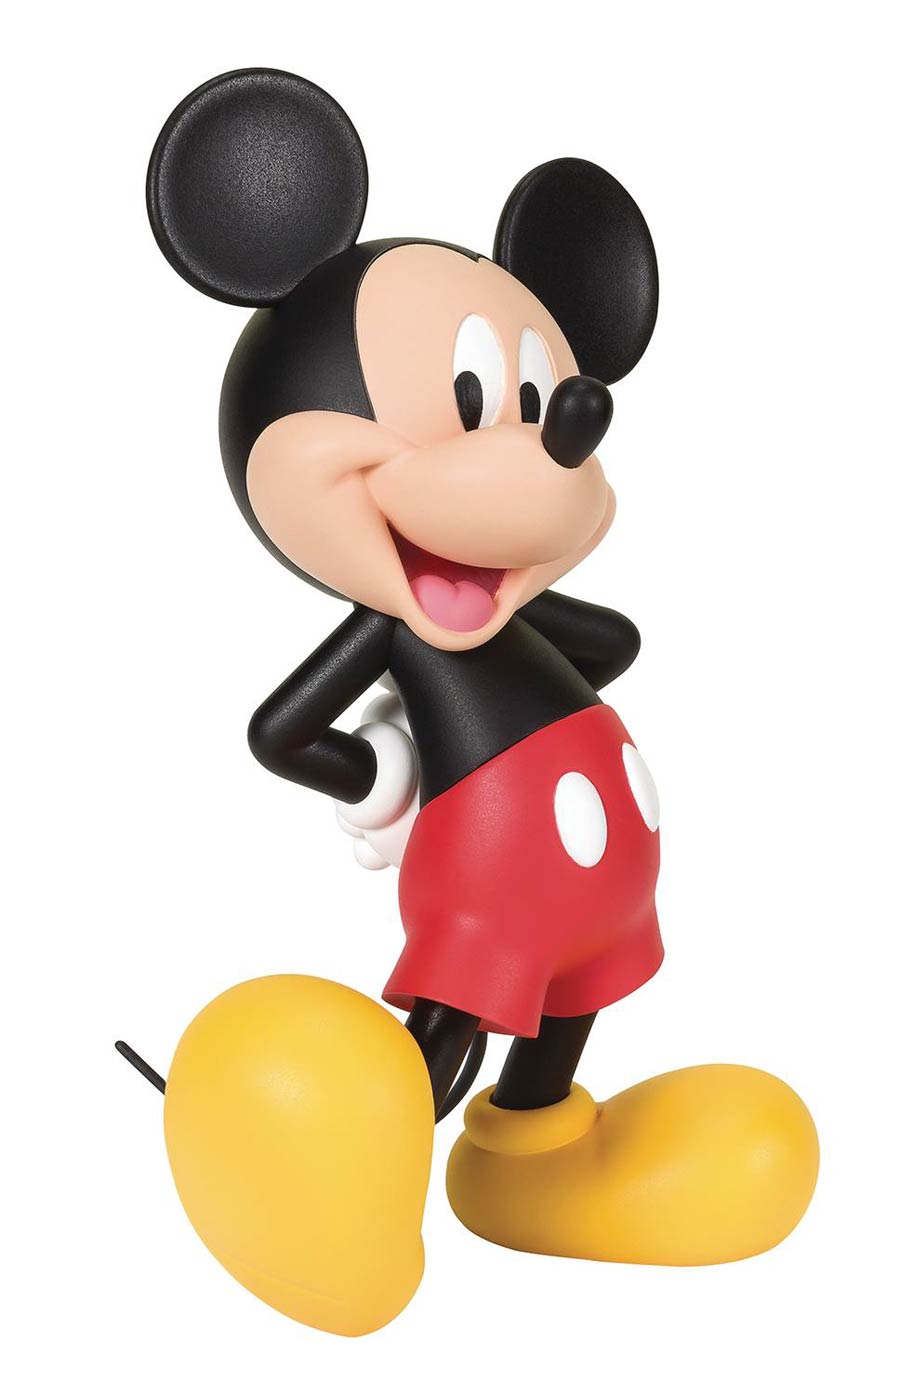 Mickey Mouse Figuarts ZERO - Modern Figure